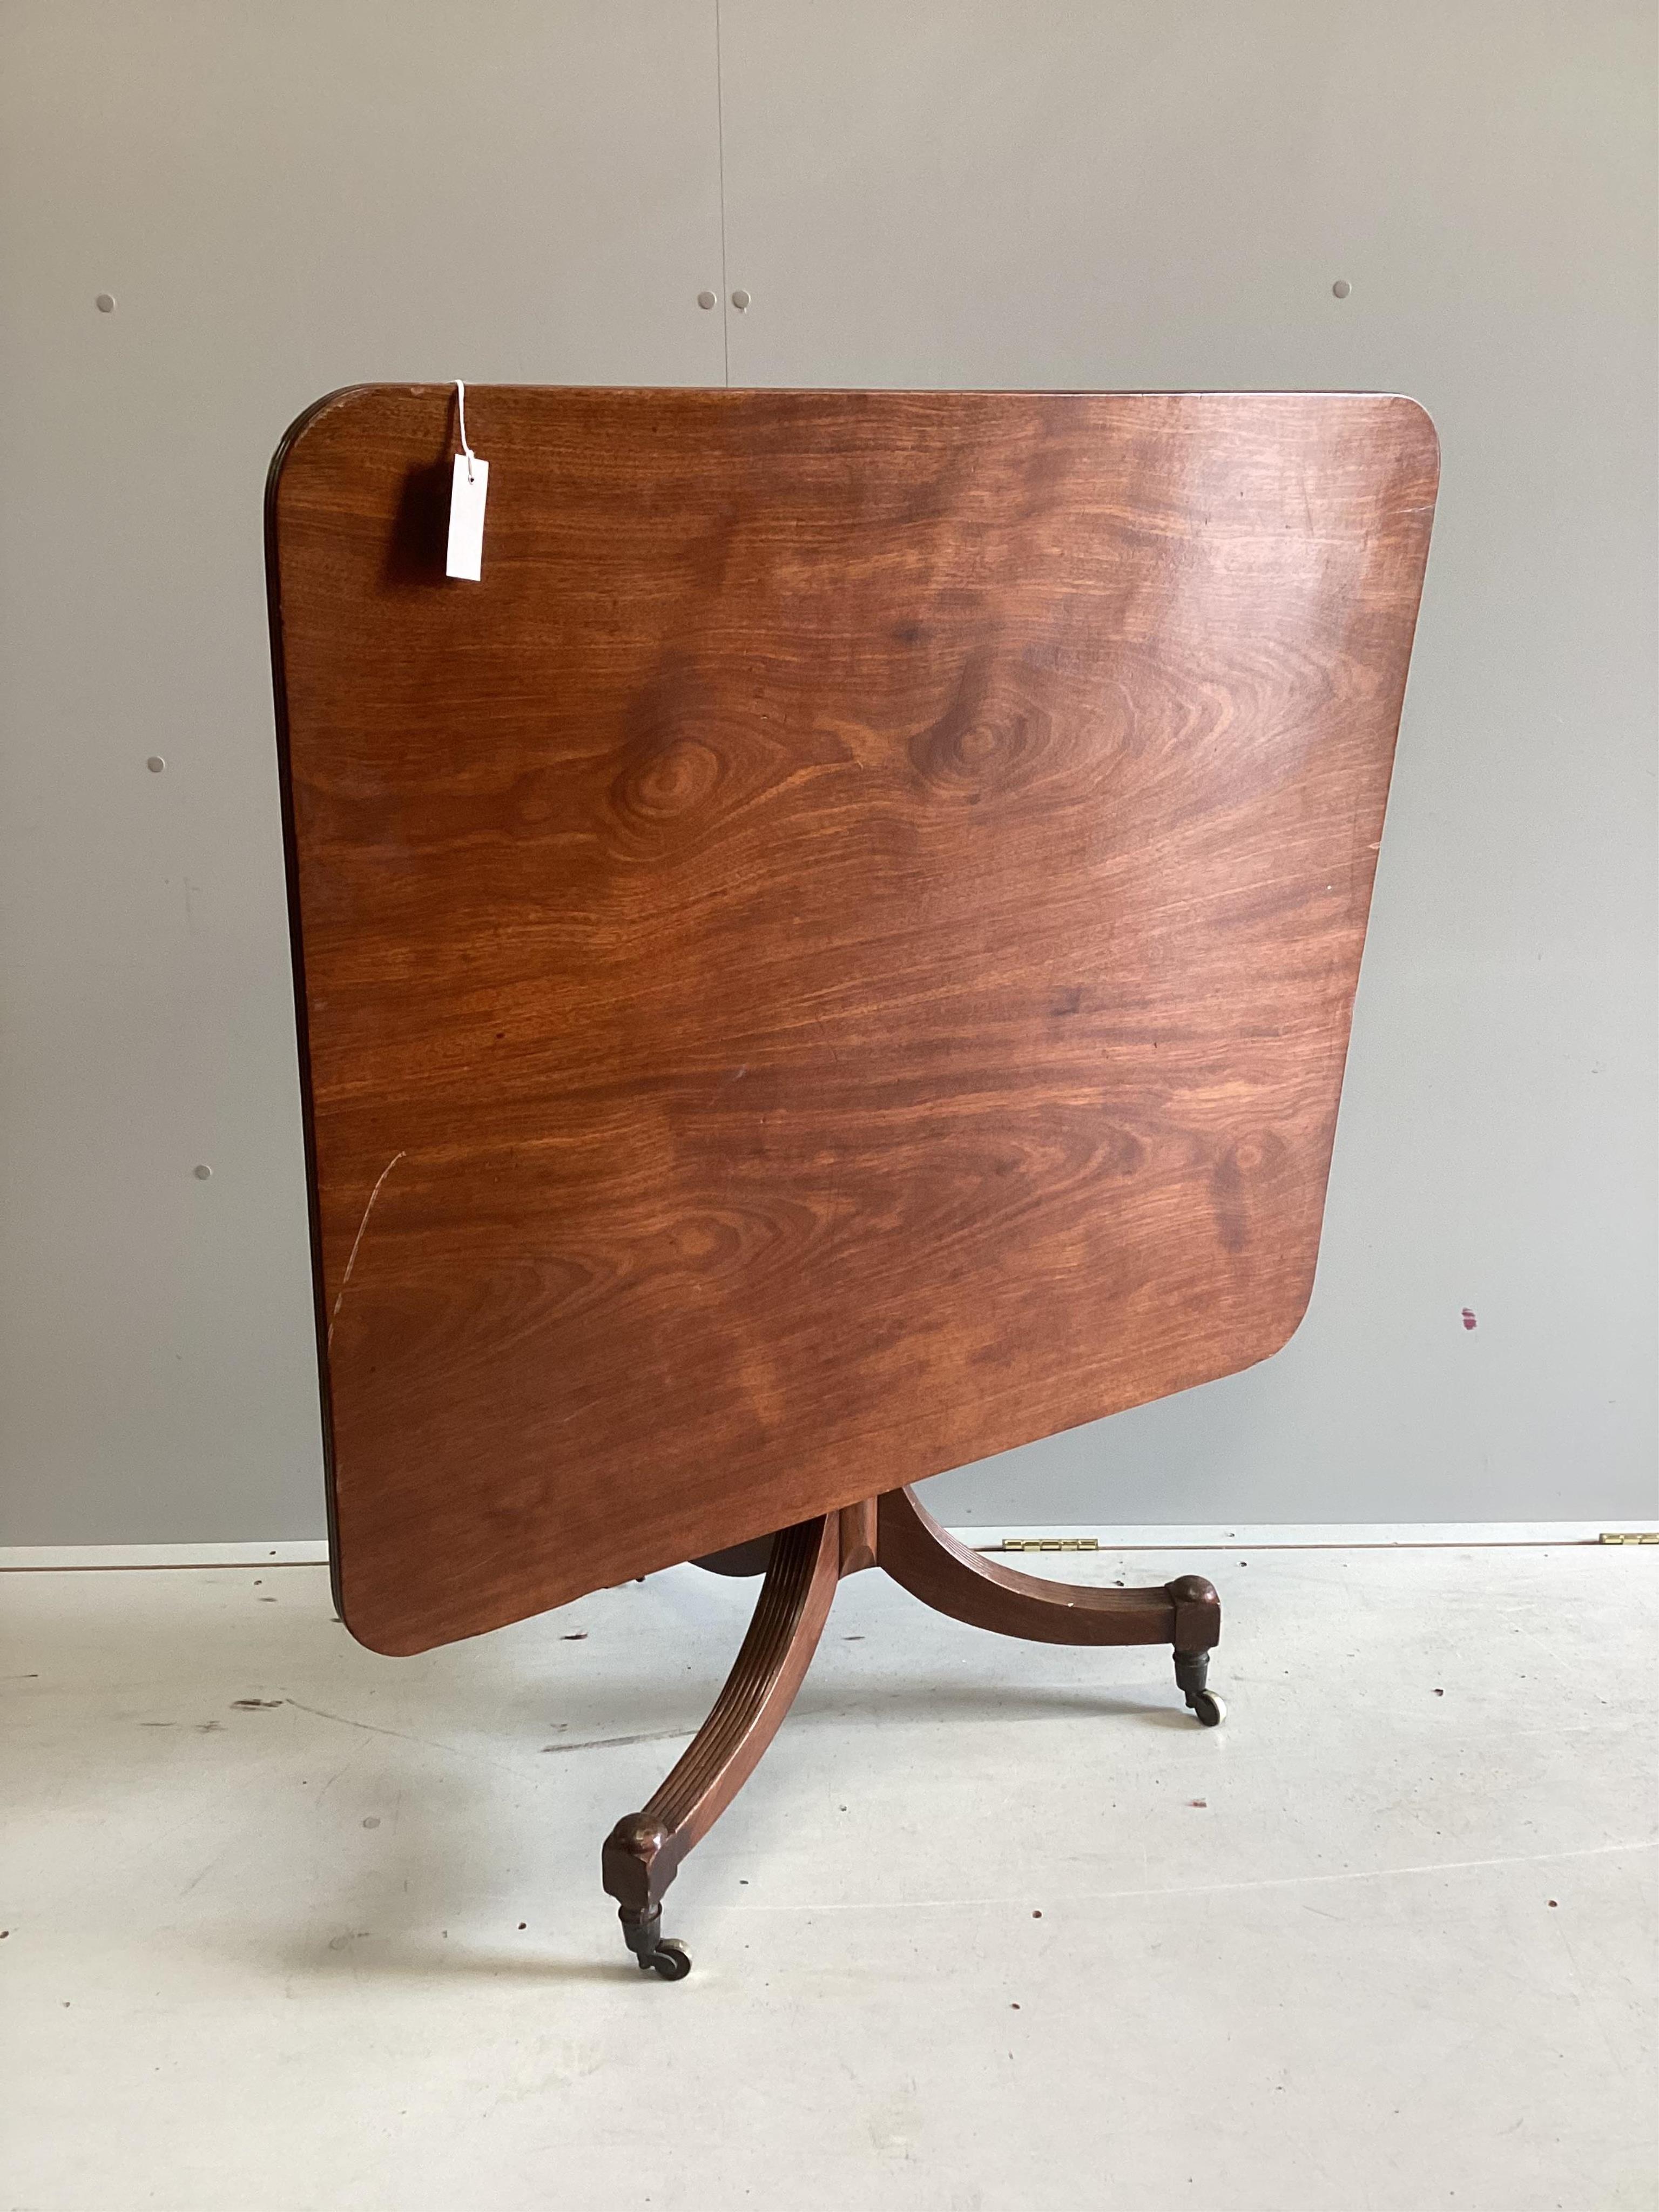 A Regency rectangular mahogany tilt top breakfast table, width 101cm, depth 91cm, height 72cm. Condition - fair